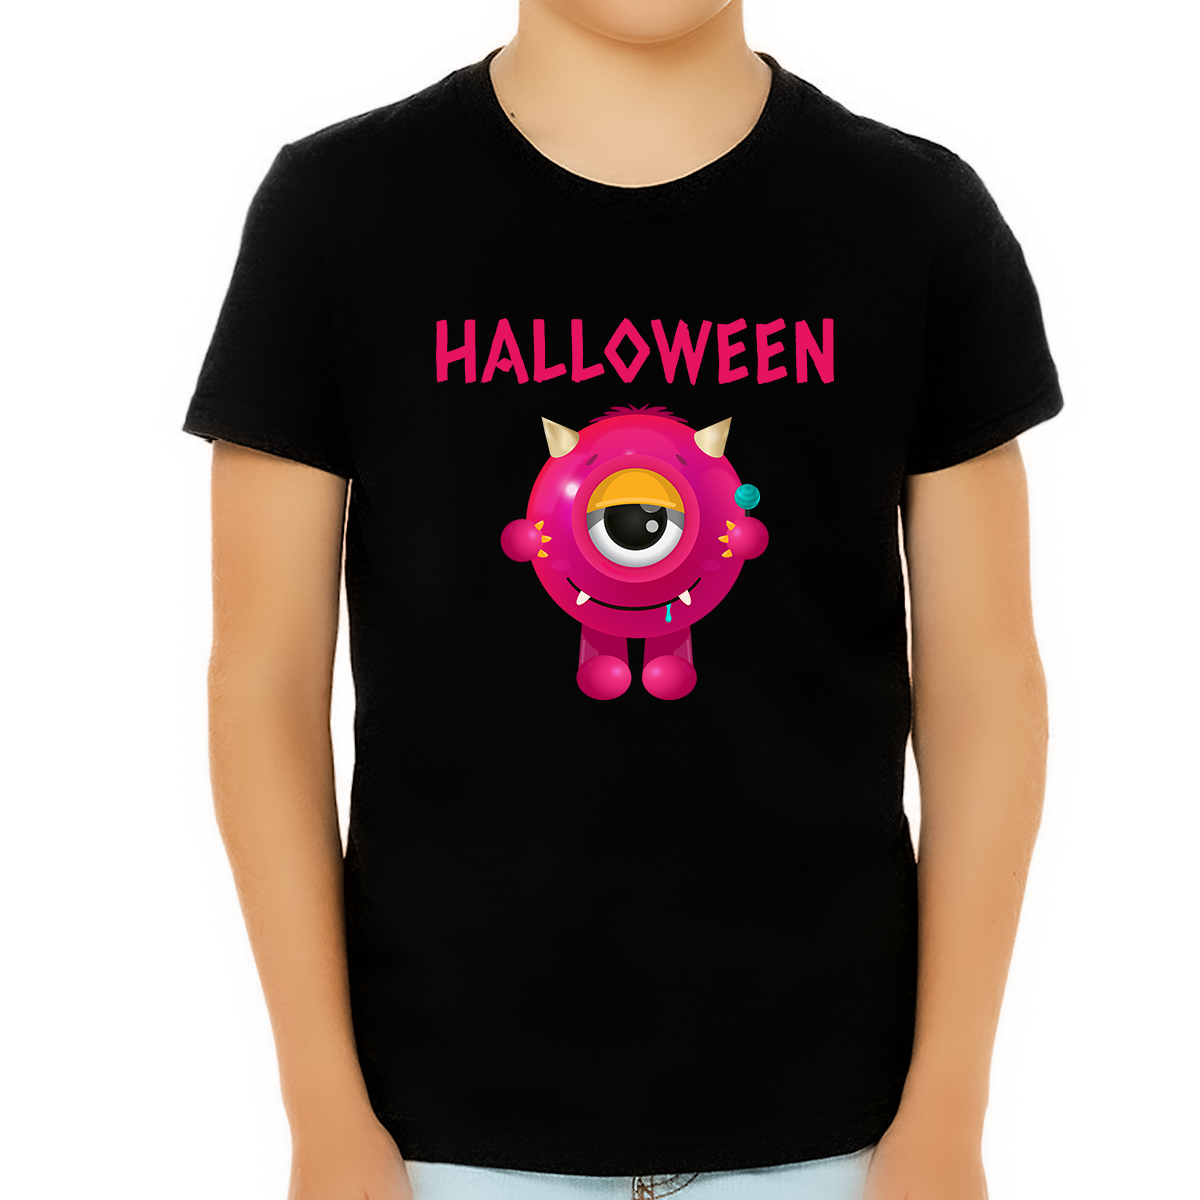 Cute One Eye Monster Shirt Boys Halloween Shirt Halloween Shirts for Boys Kids Halloween Shirt